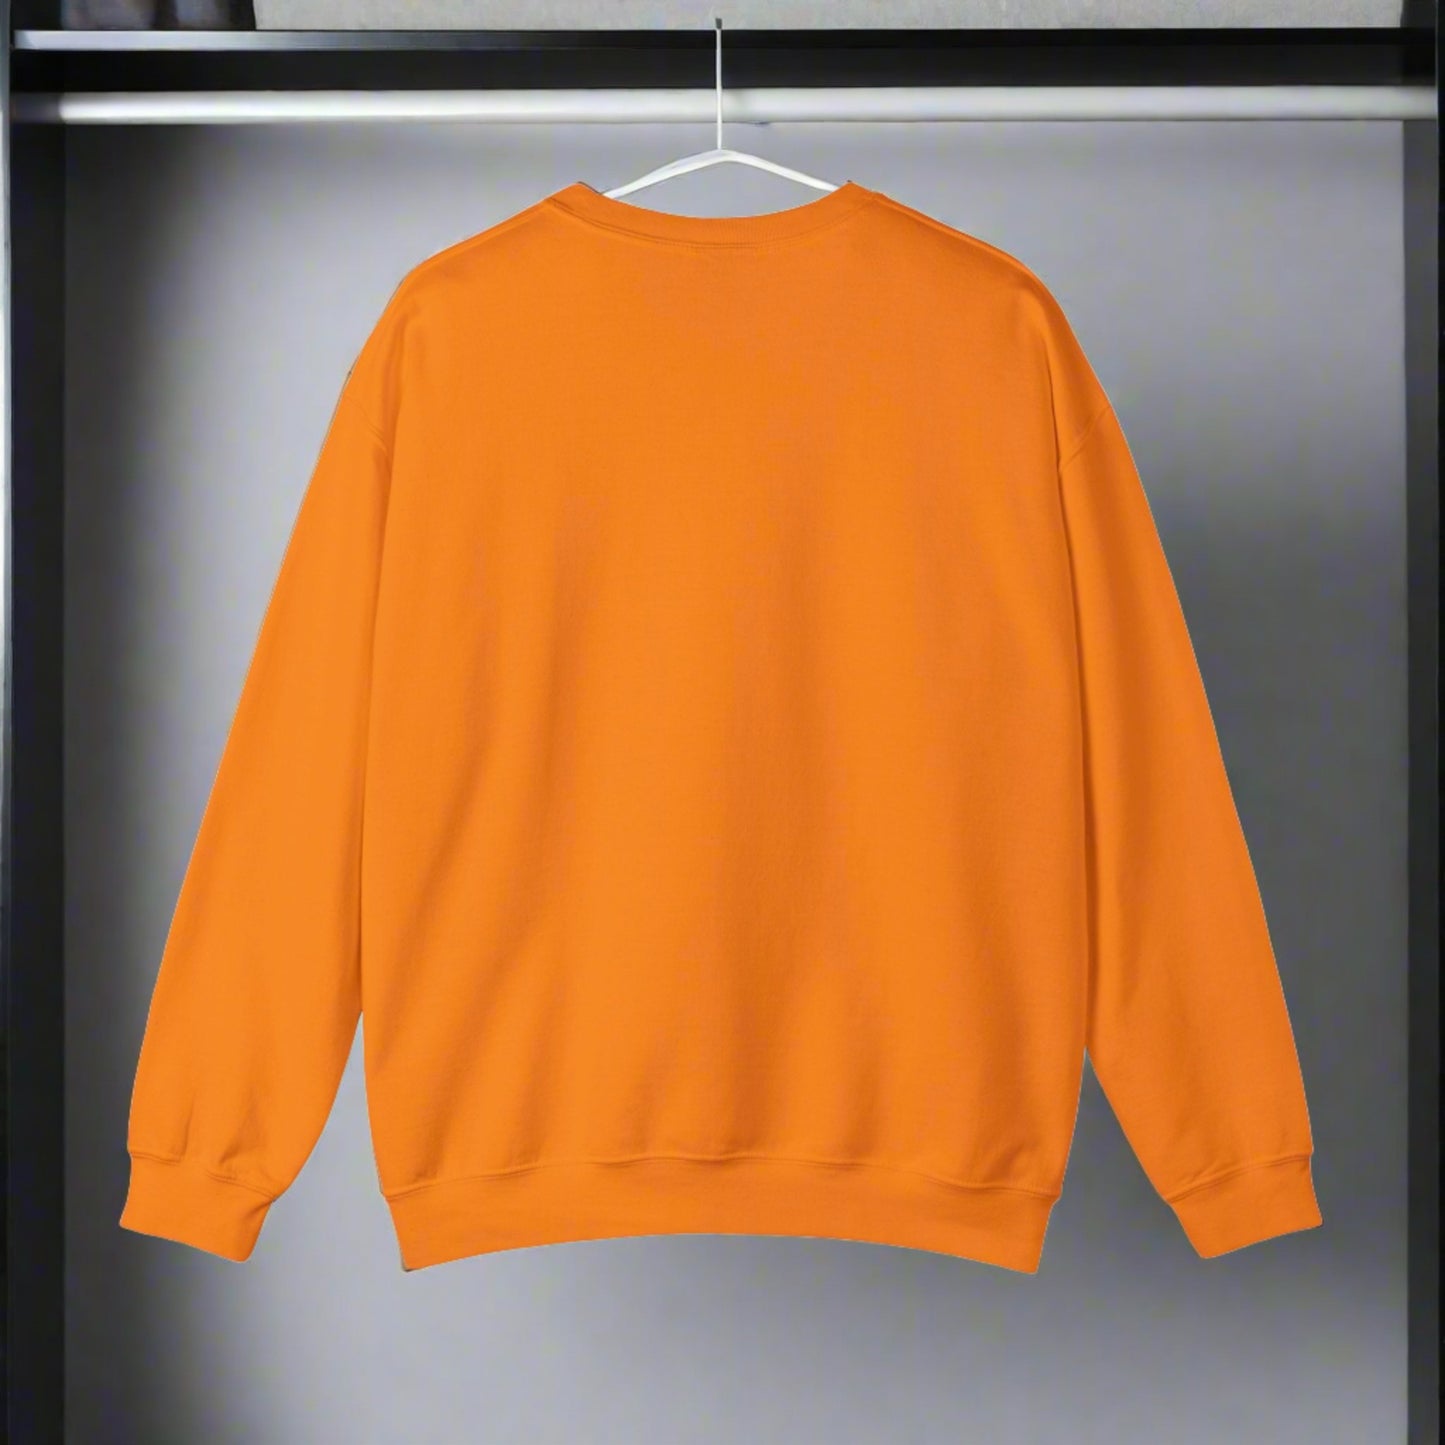 Orange Sweatshirt Life is Beautiful Positive high Quality.